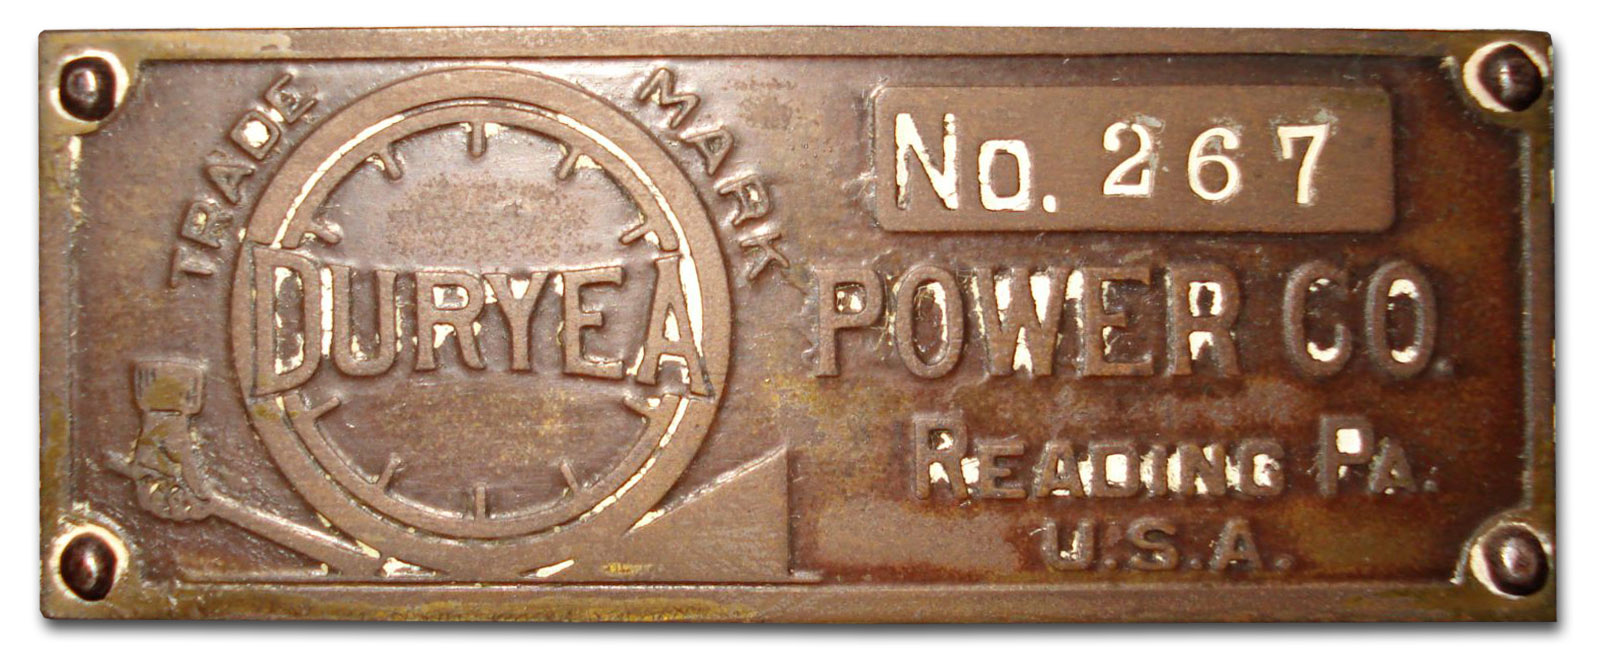 1904. Duryea Power Company (1904 serial plate)